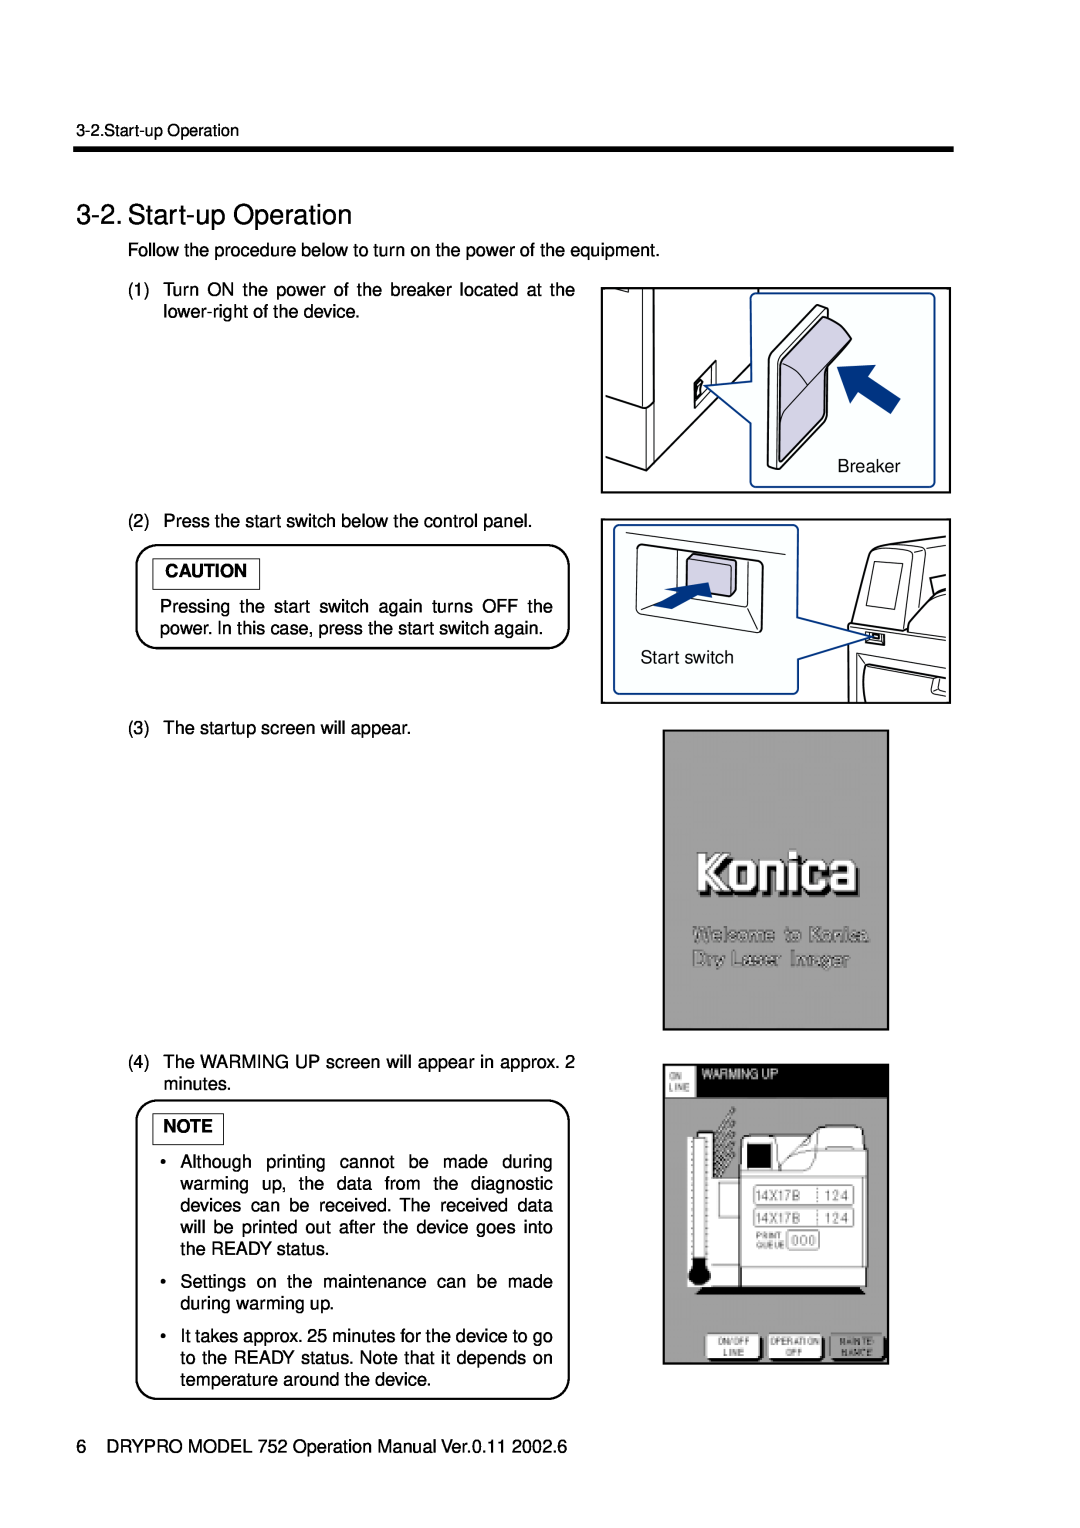 Konica Minolta 752 operation manual Start-up Operation, Breaker, Start switch 